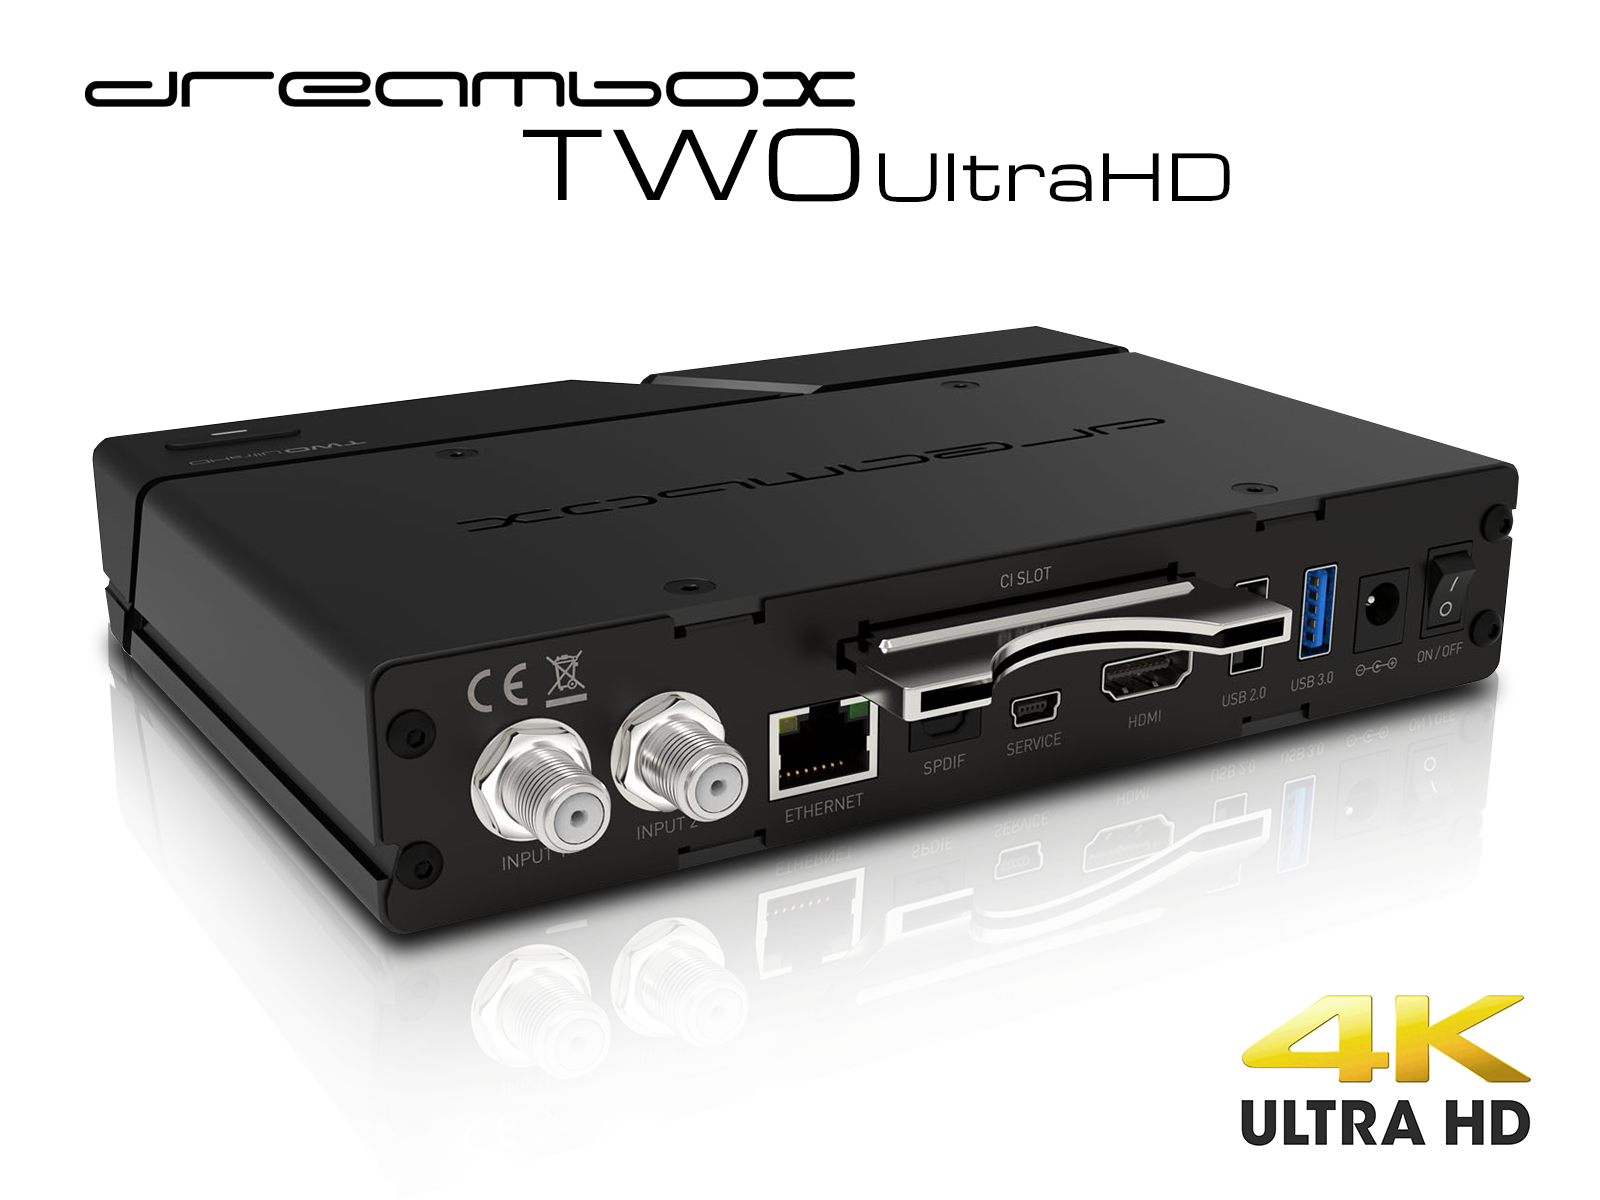 Dreambox Two Ultra HD BT 2x DVB-S2X MIS Tuner 4K 2160p E2 Linux Dual Wifi H.265 B-Ware 